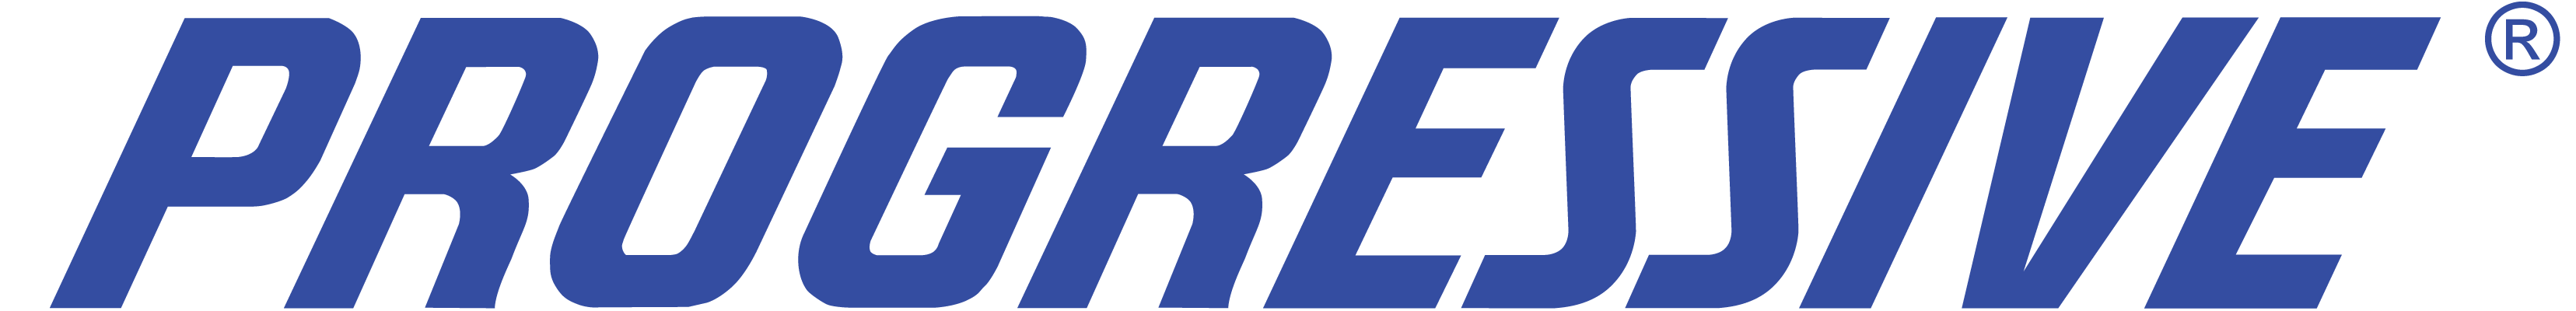 Progressive Logo - Progressive Logos